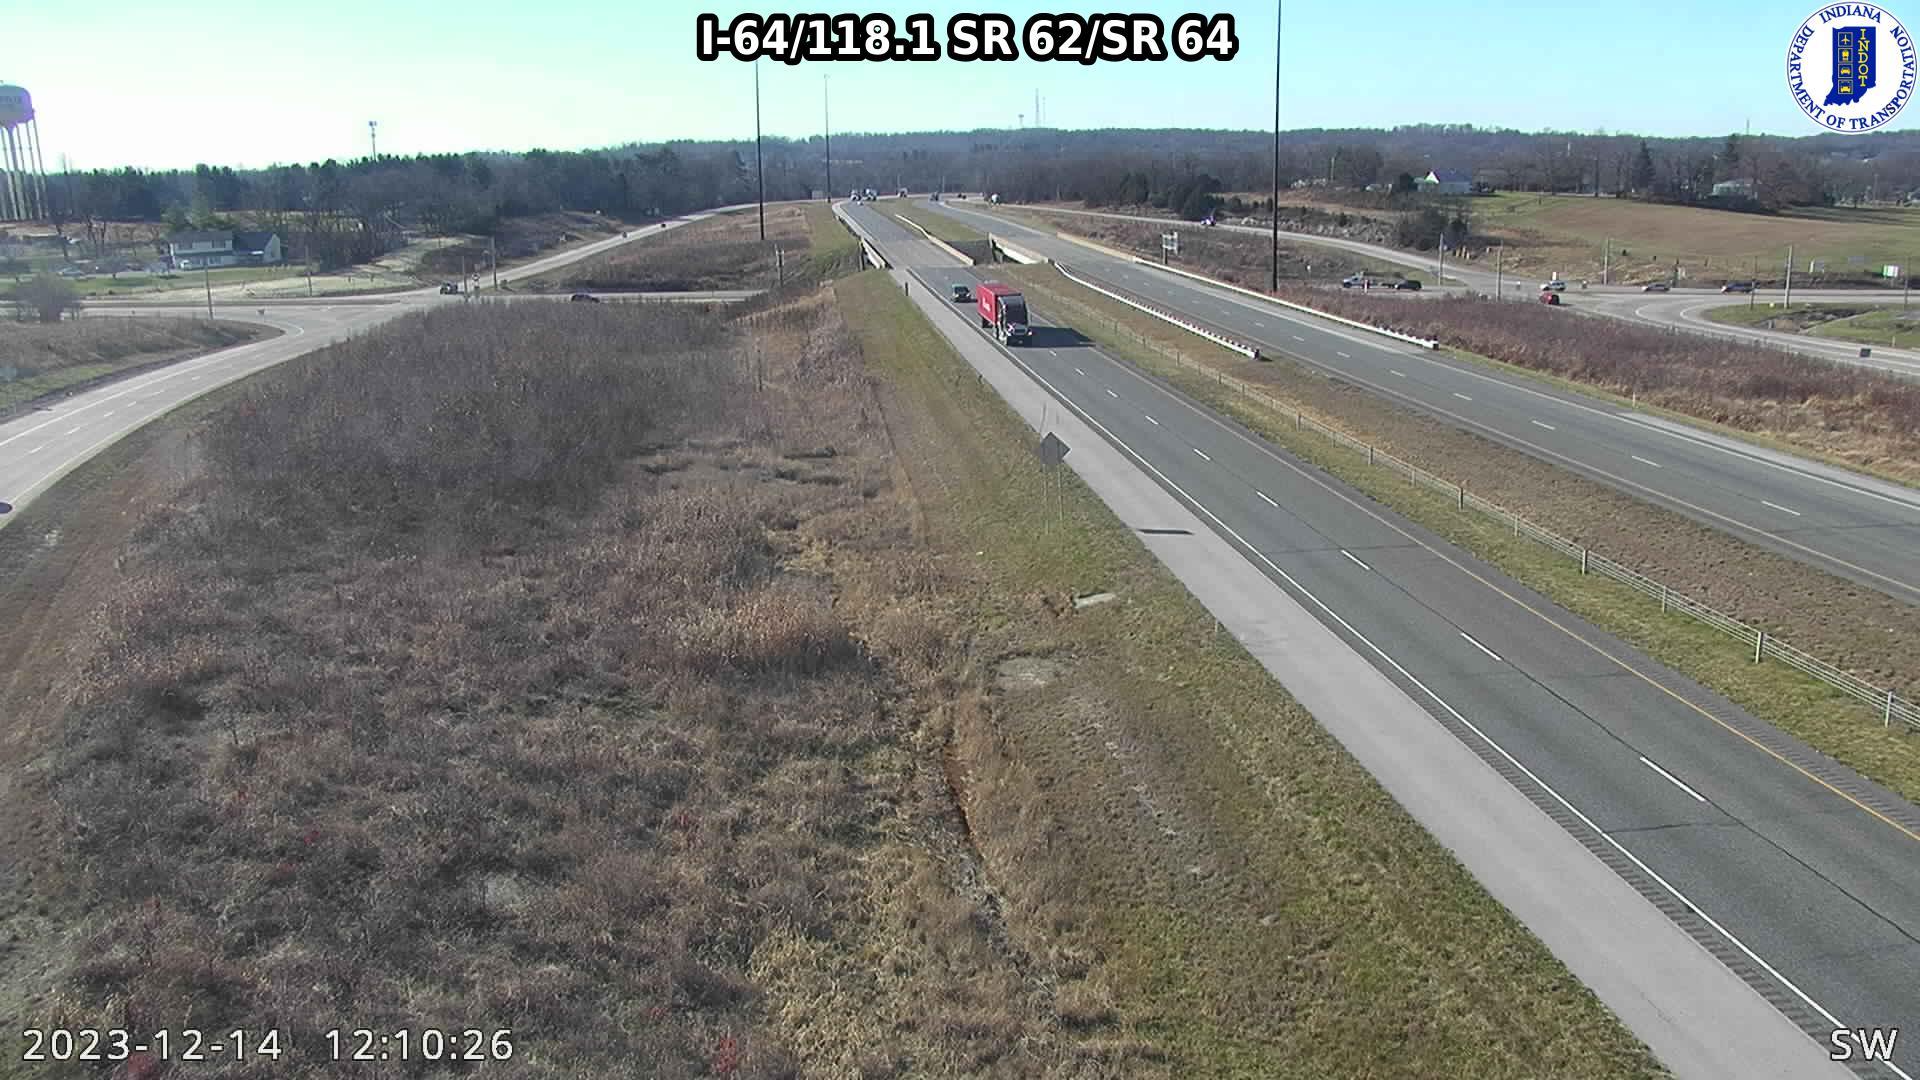 Edwardsville: I-64: I-64/118.1 SR 62/SR 64: I-64/118.1 SR 62/SR 64 Traffic Camera